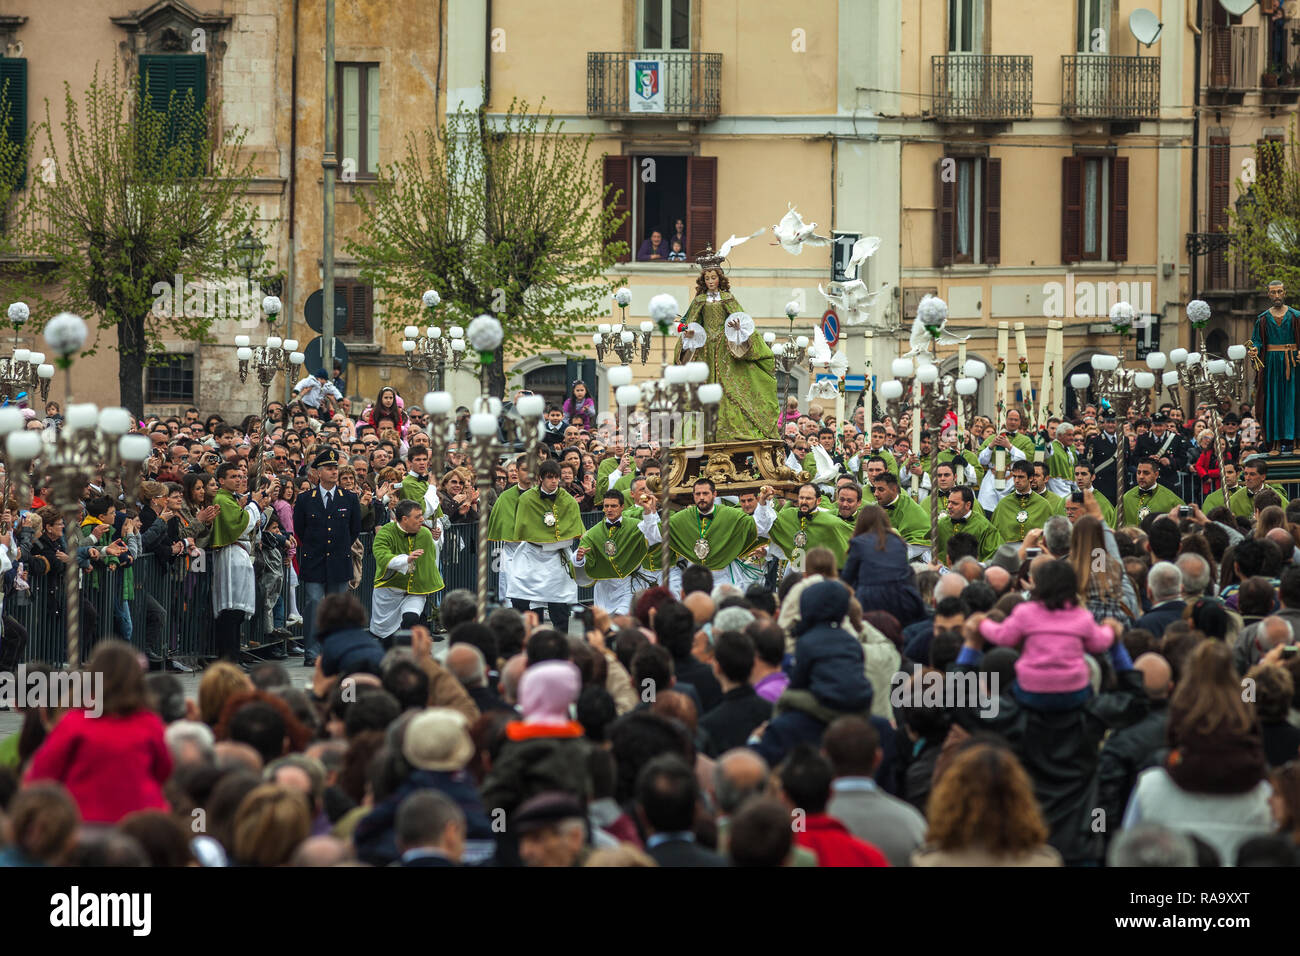 Madonnenfest auf dem Platz in Sulmona. Traditionelle Osterferien. Sulmona, Provinz L'Aquila, Abruzzen, Italien, Europa Stockfoto